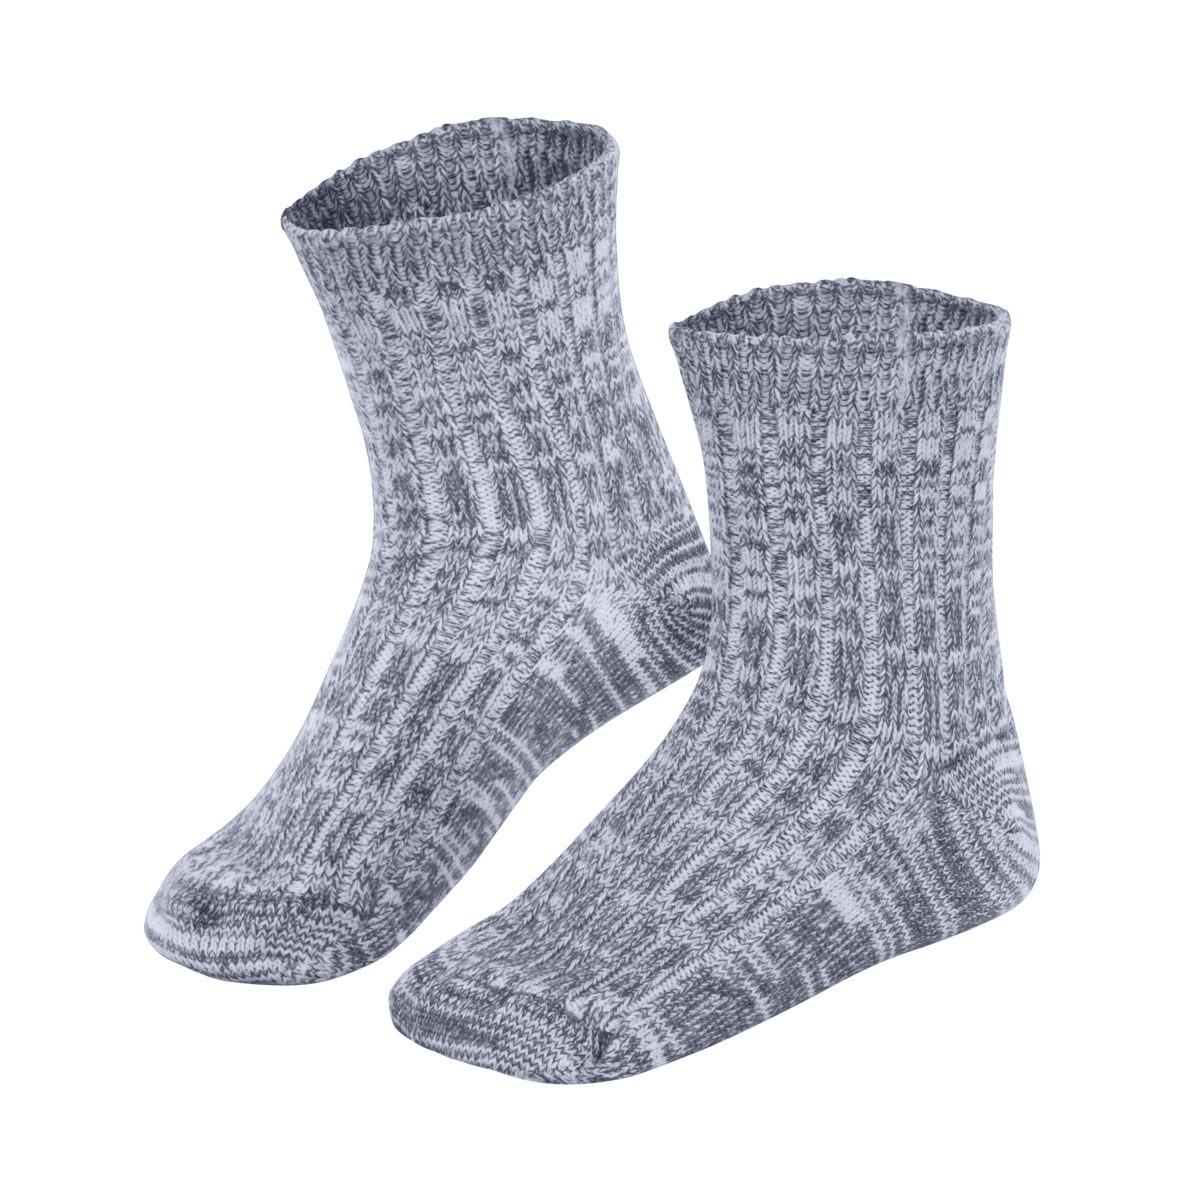 LIVING CRAFTS Norwegersocken Warme Socken für aktive Kids